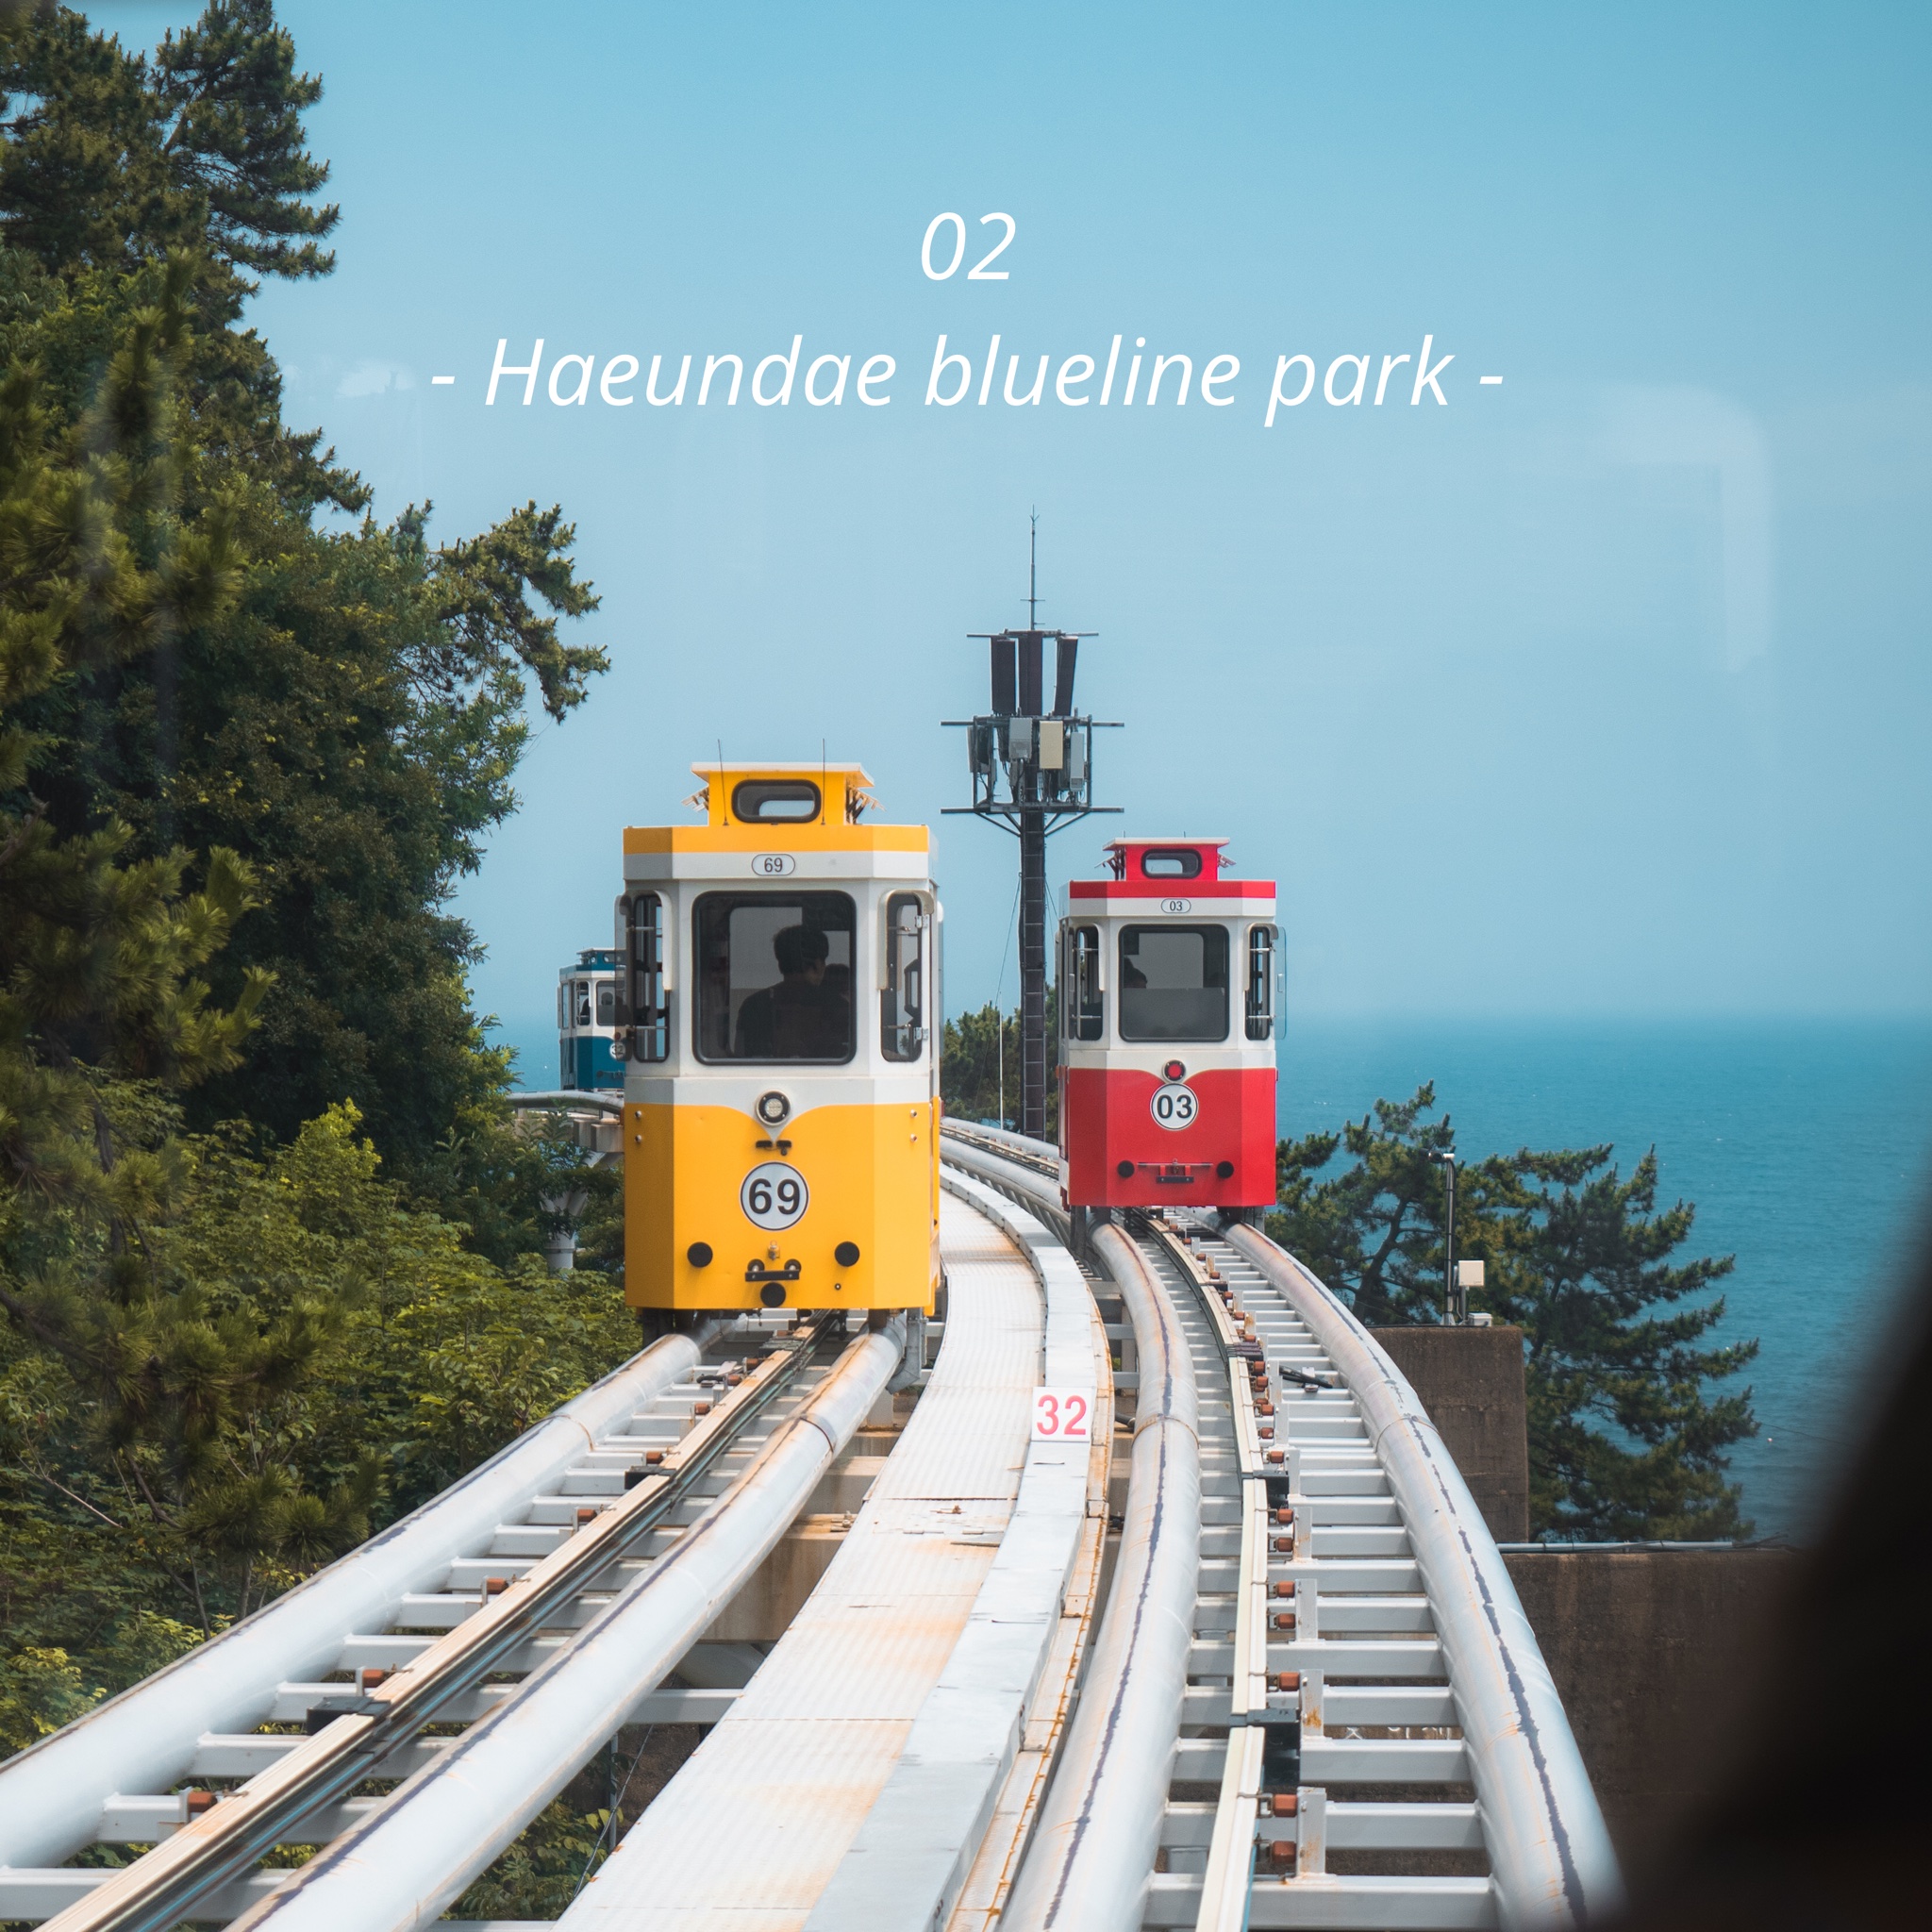 Haeundae Blueline Park